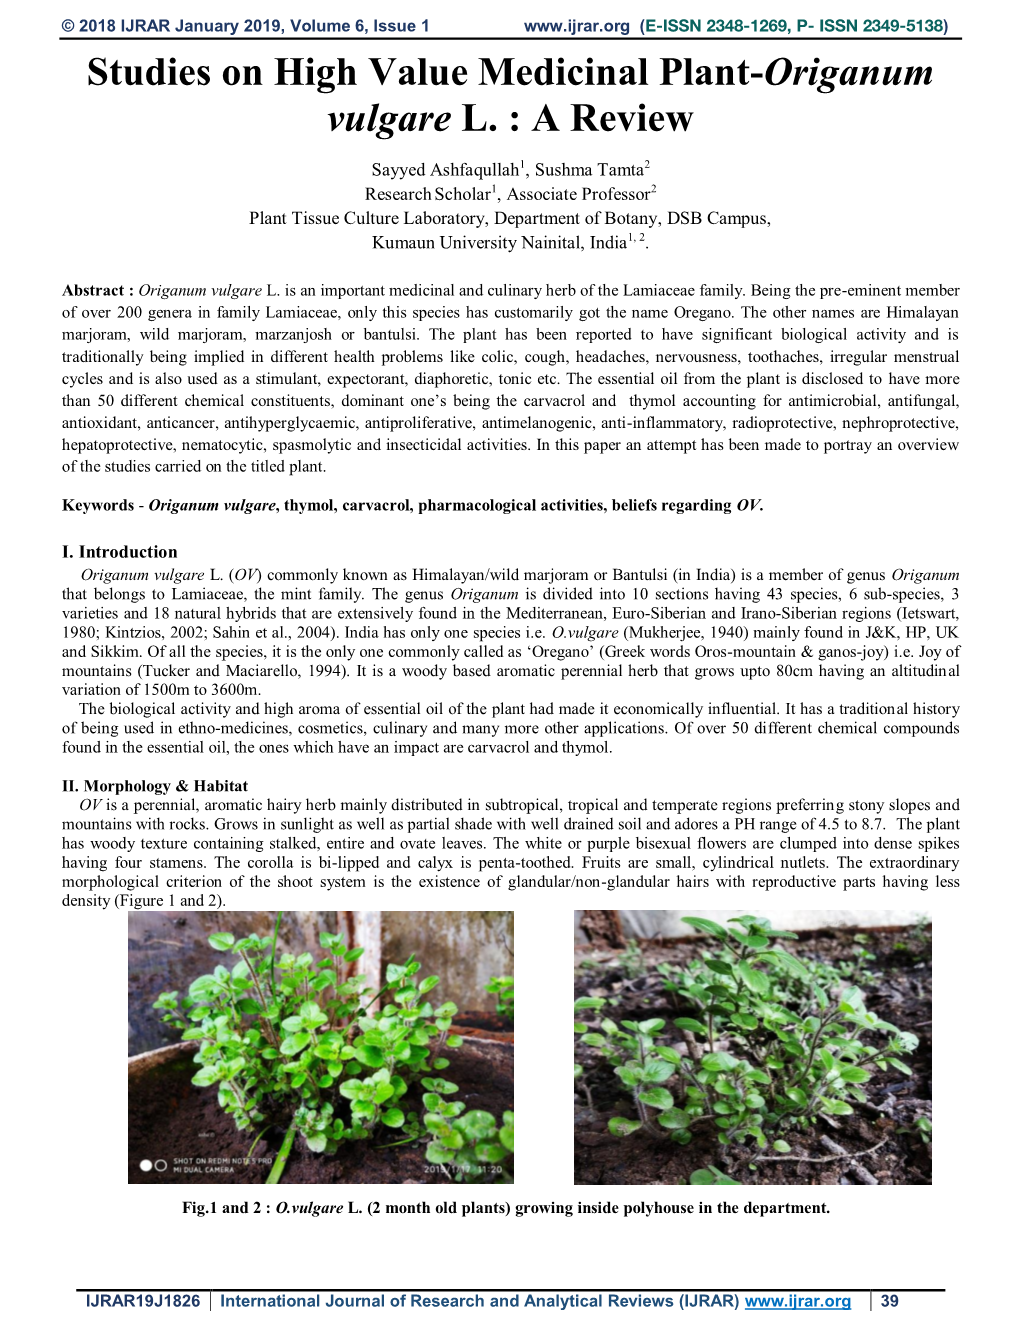 Studies on High Value Medicinal Plant-Origanum Vulgare L. : a Review